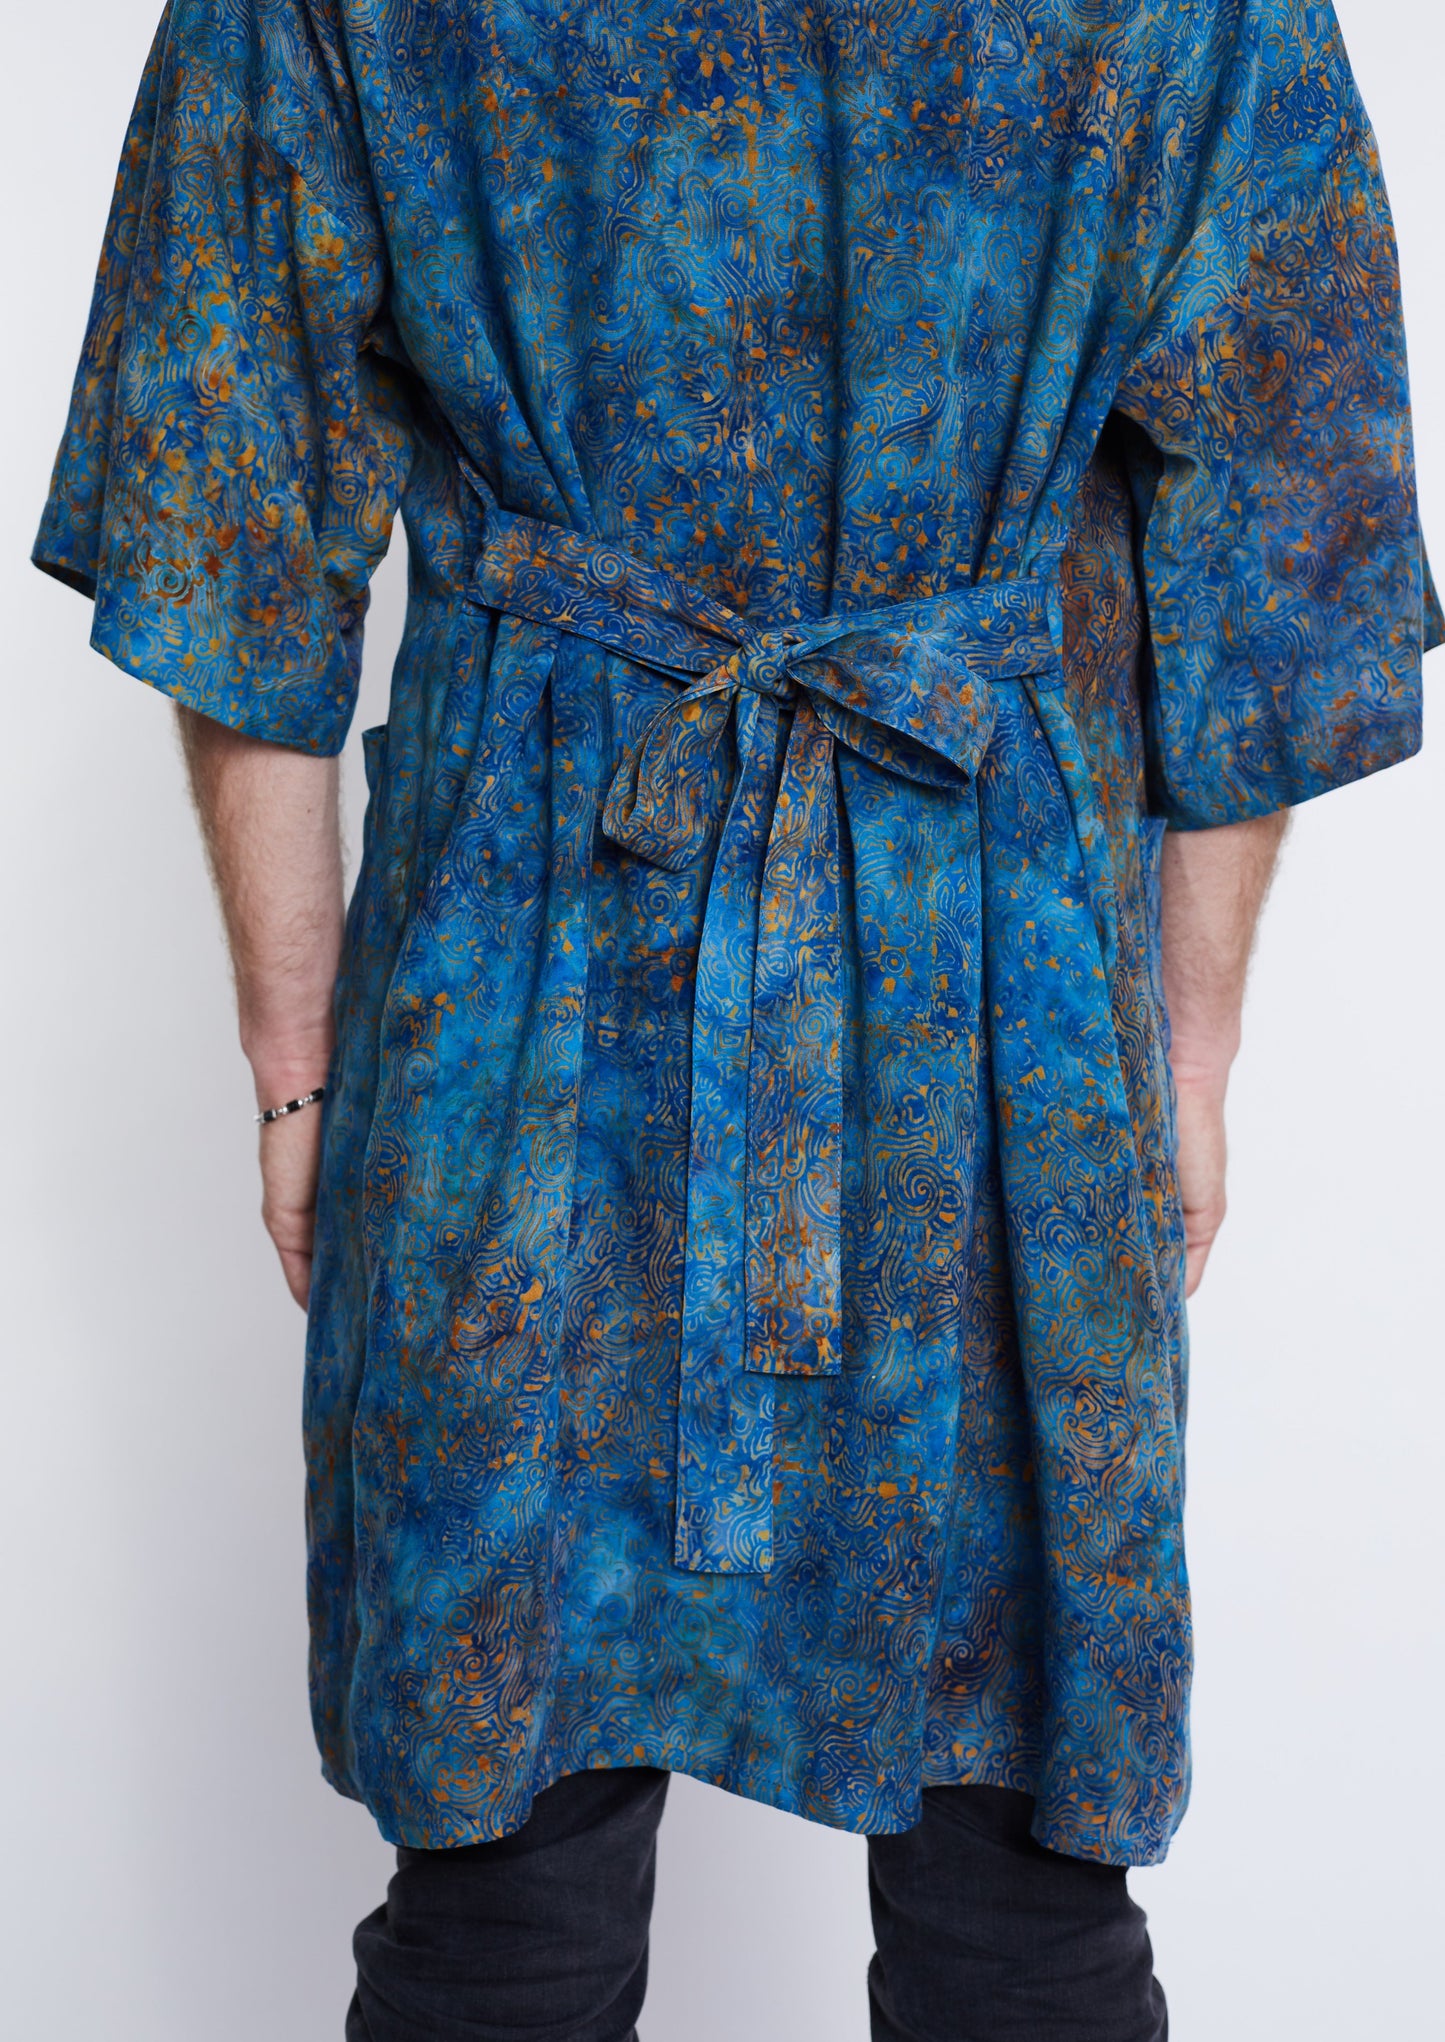 Langer Blue-Orang-Waves handmade Kimono